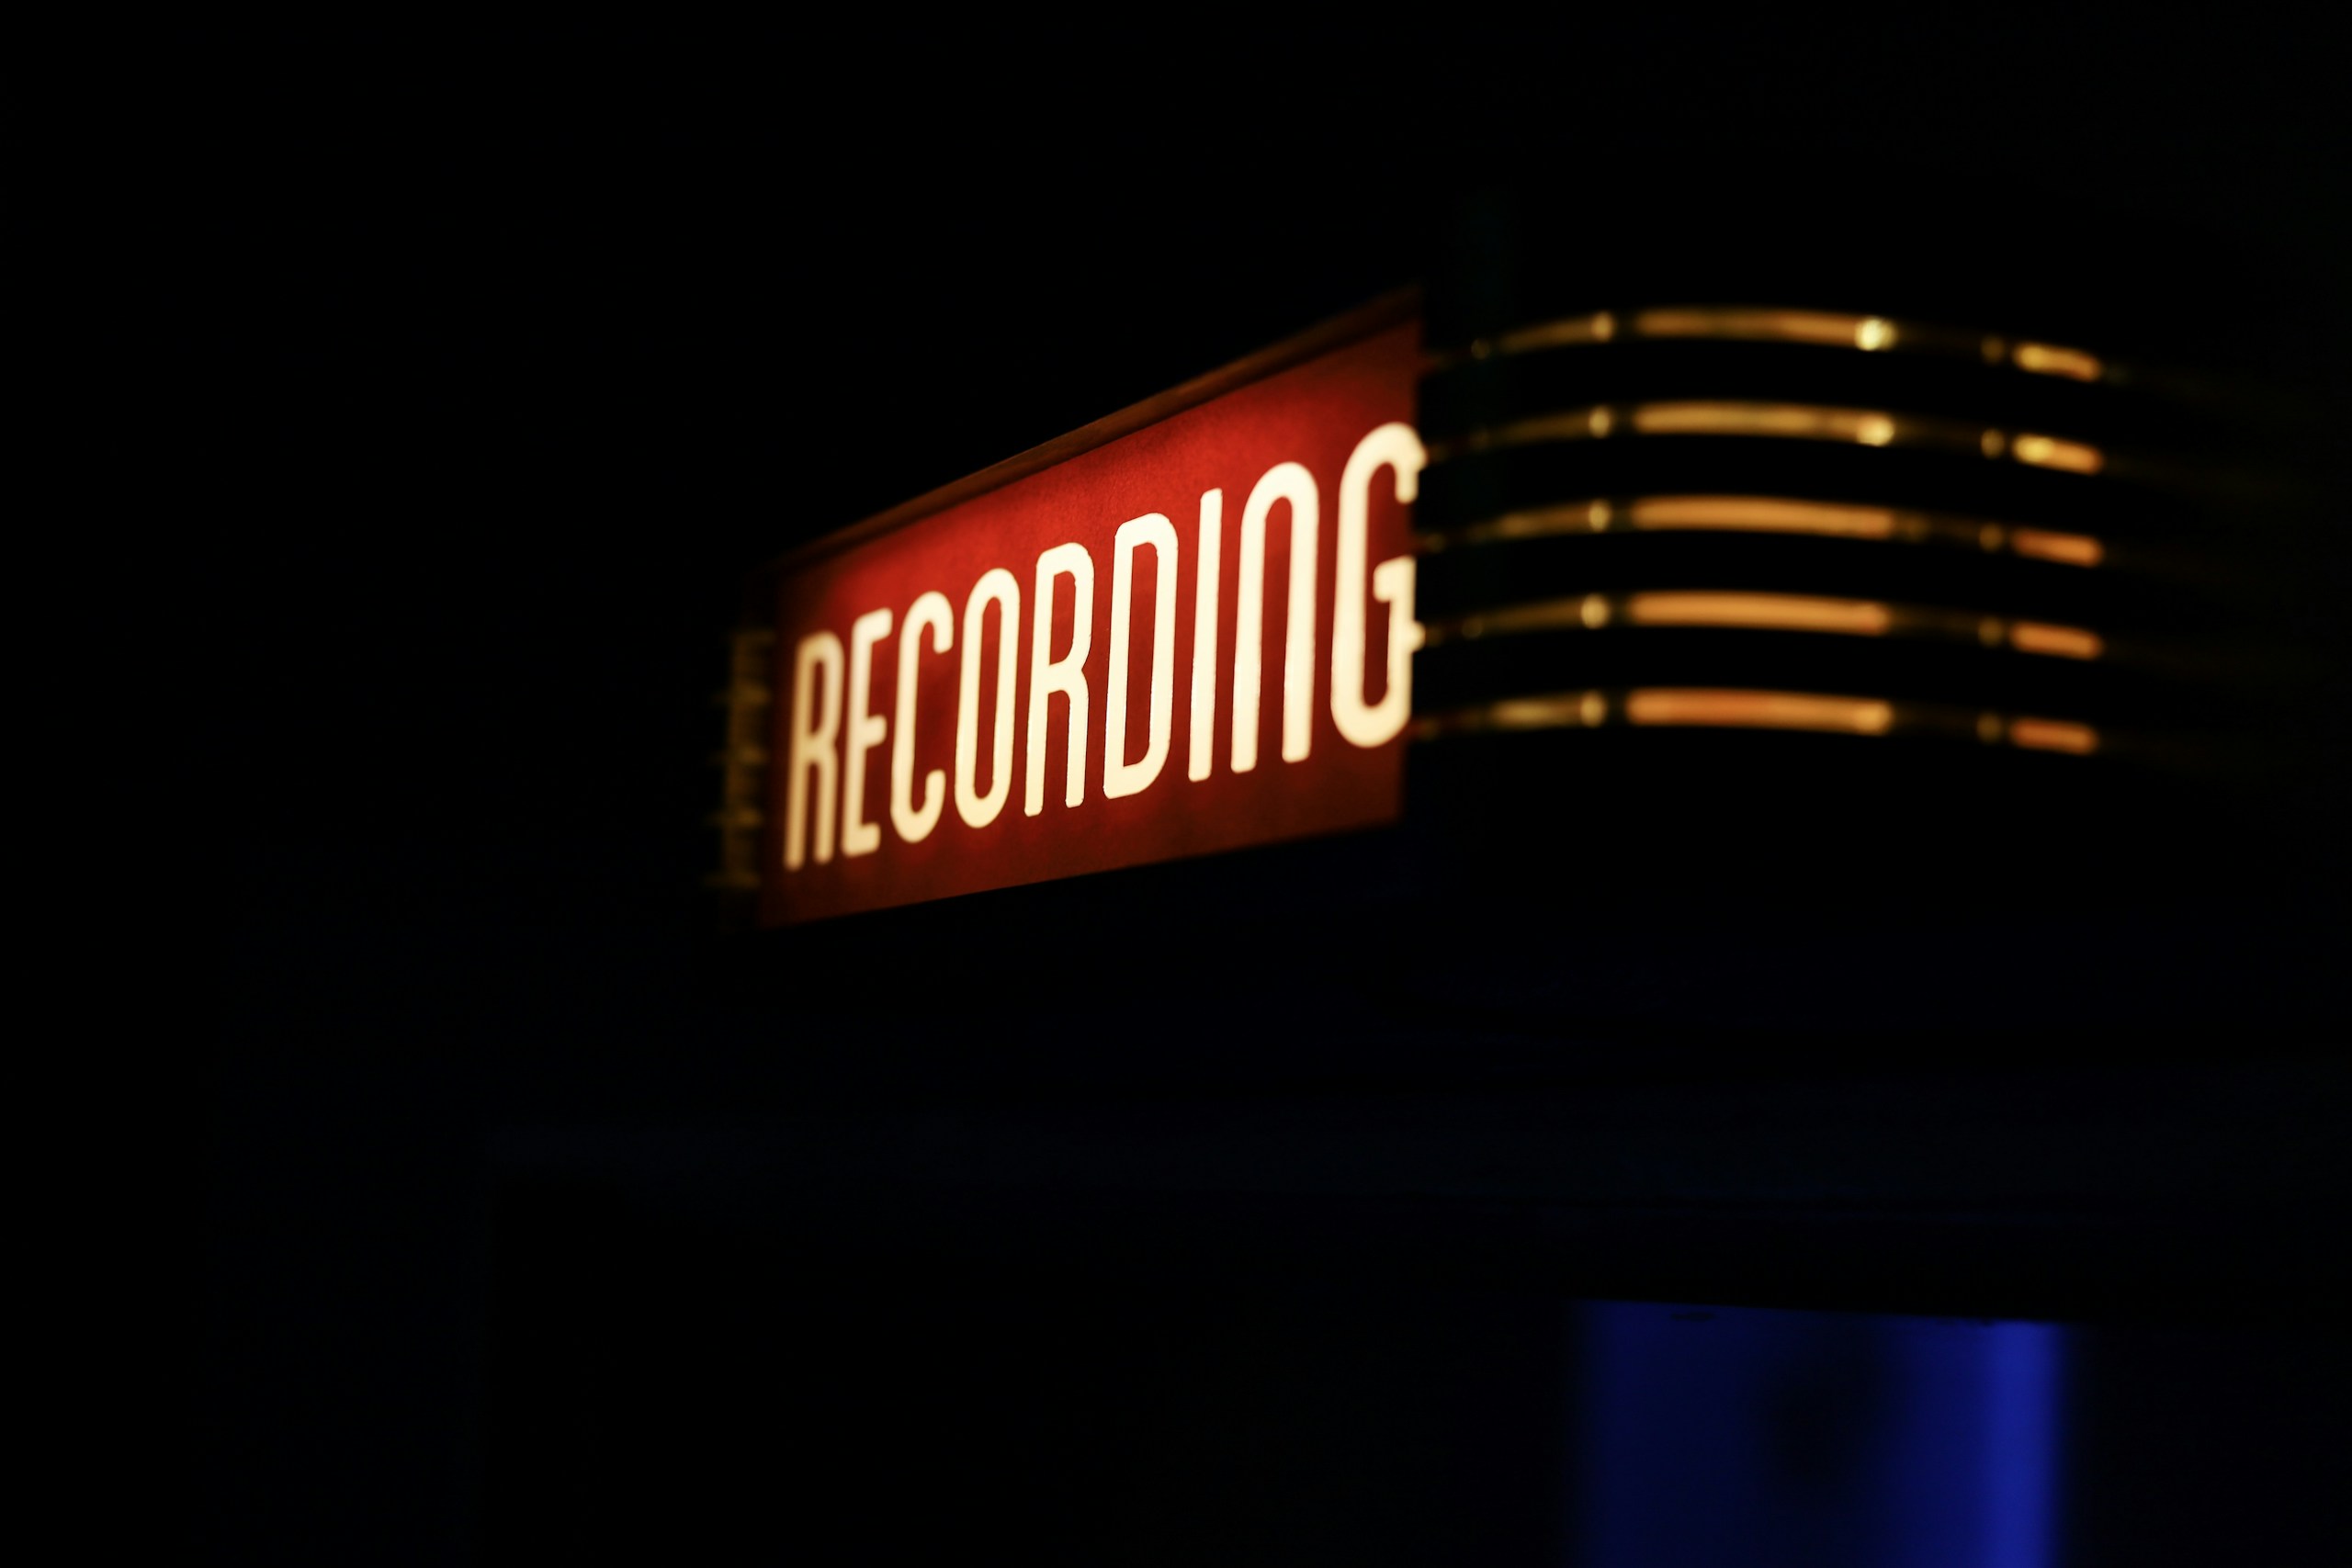 Recording studio sign image